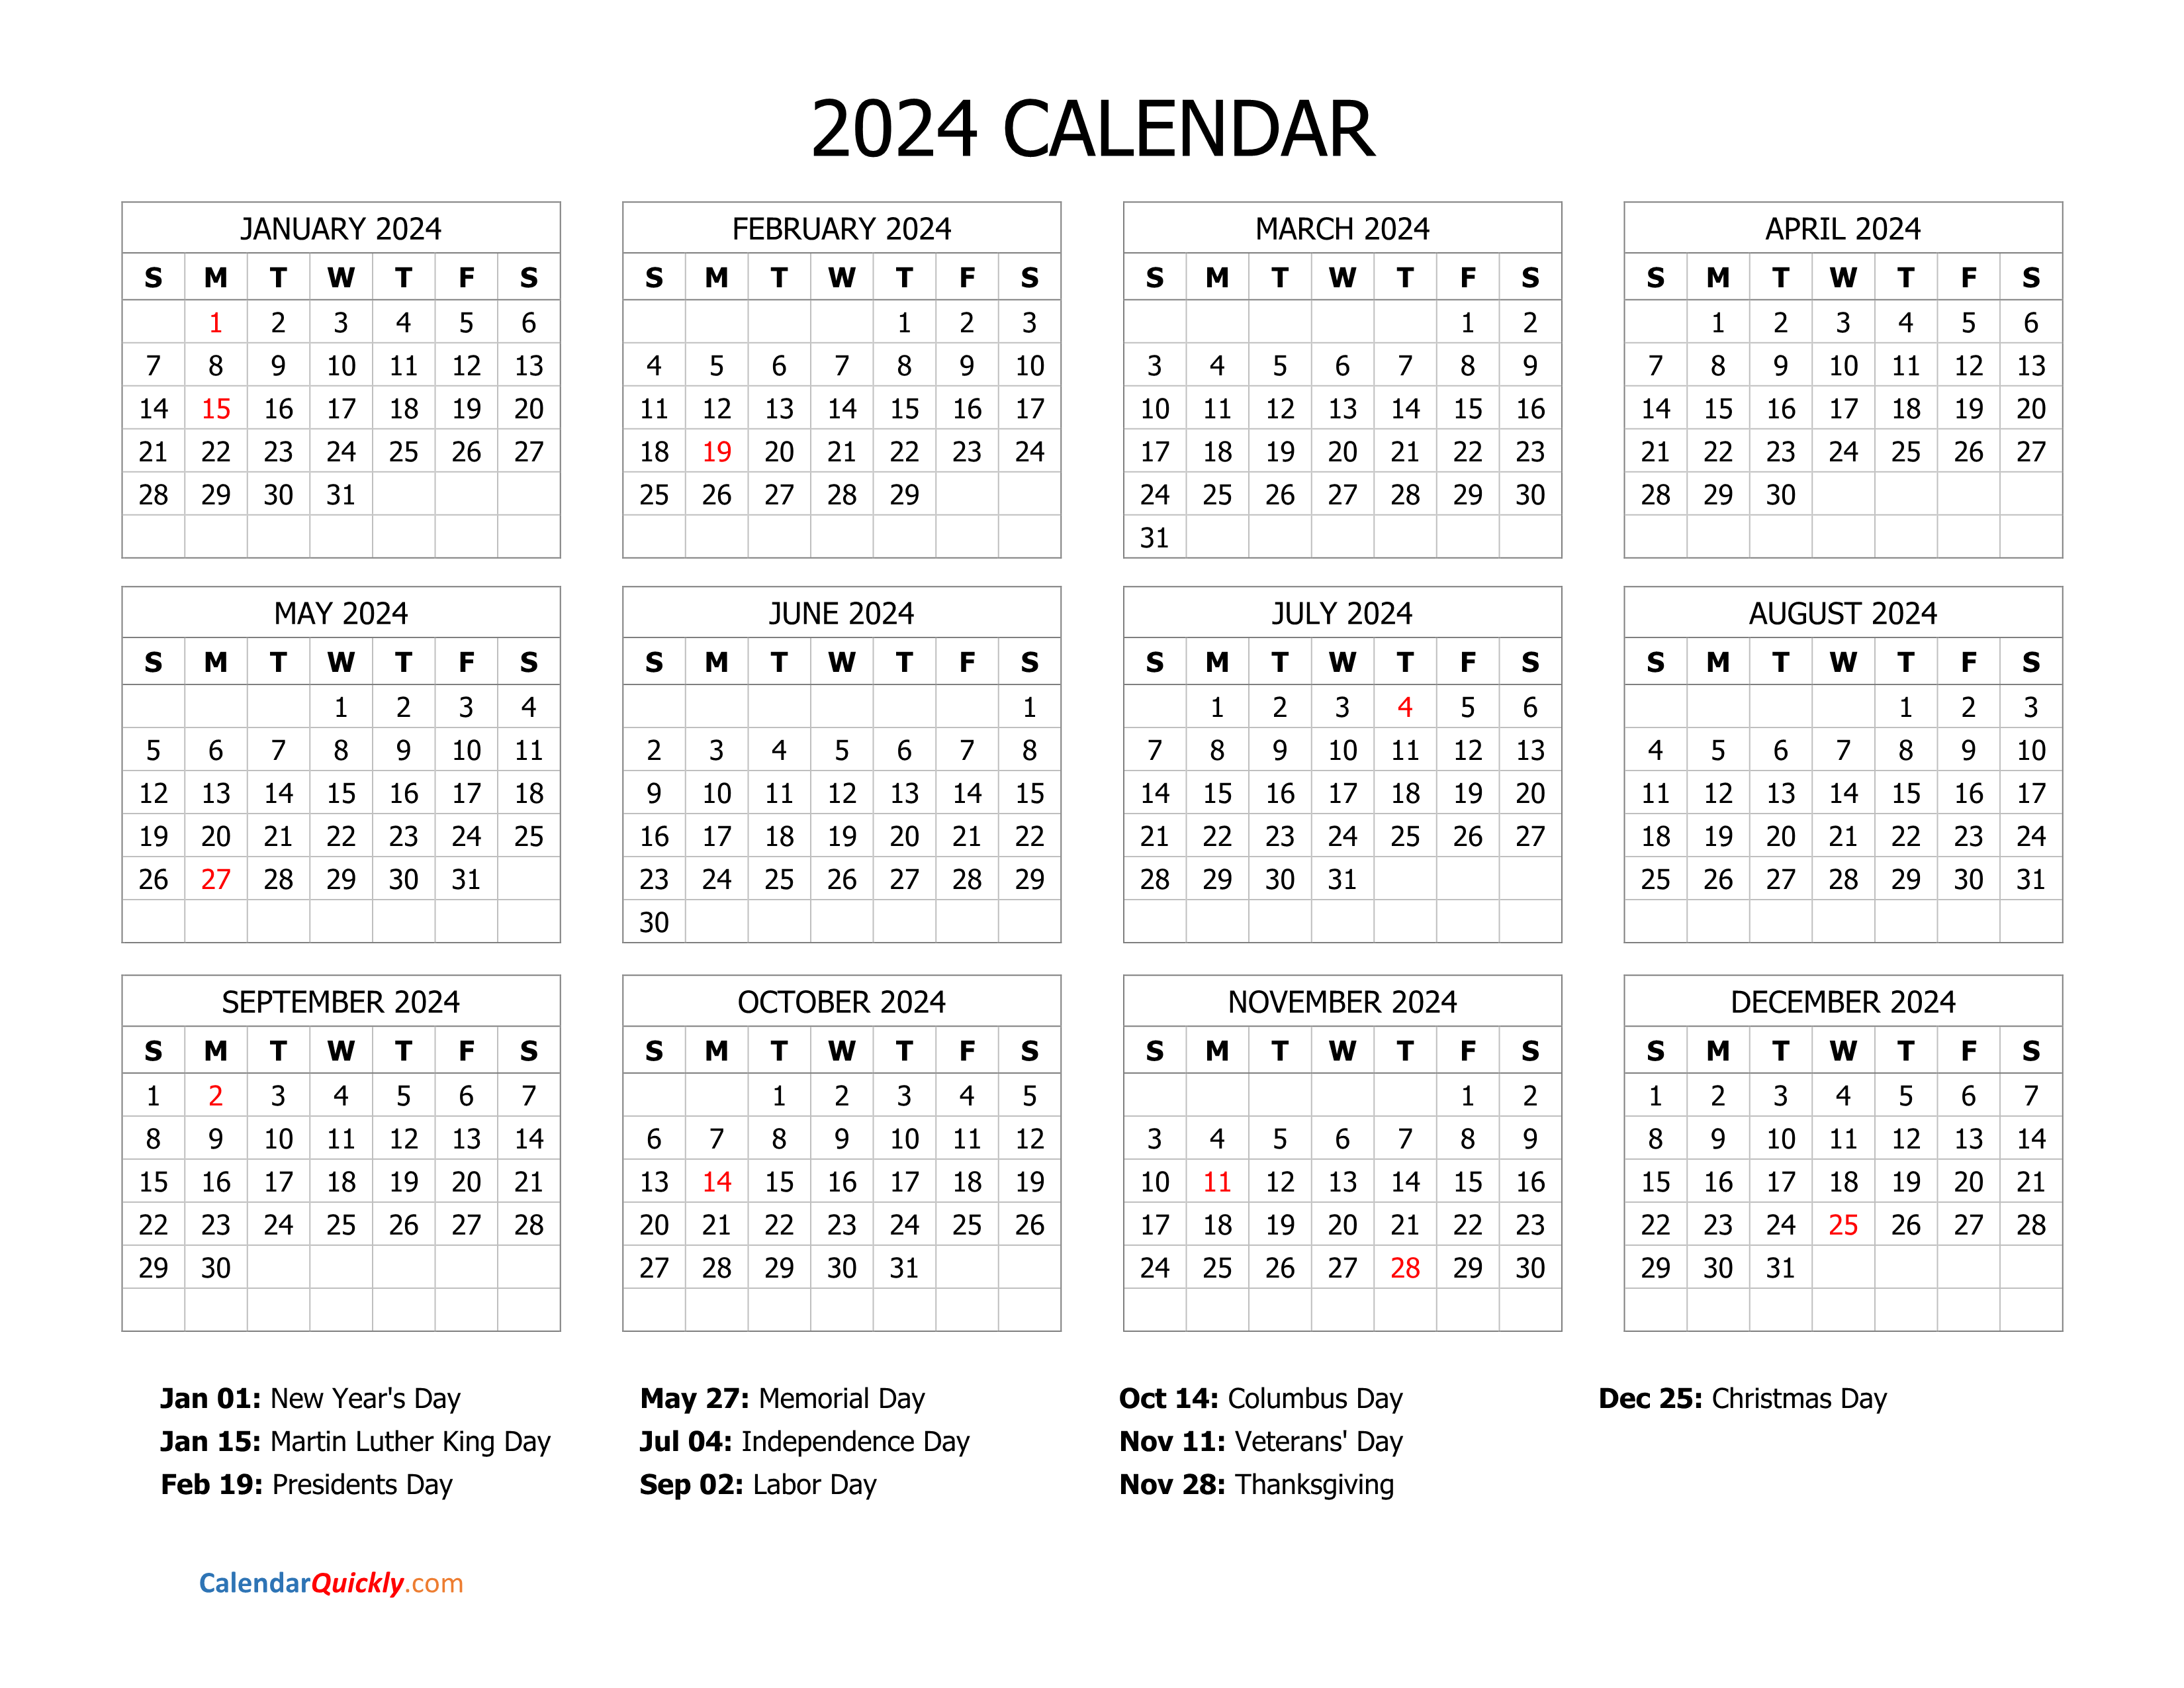 Printable Calendar 2024 With Holidays - Free Printable 2024 Calendar With Holidays Month By Month